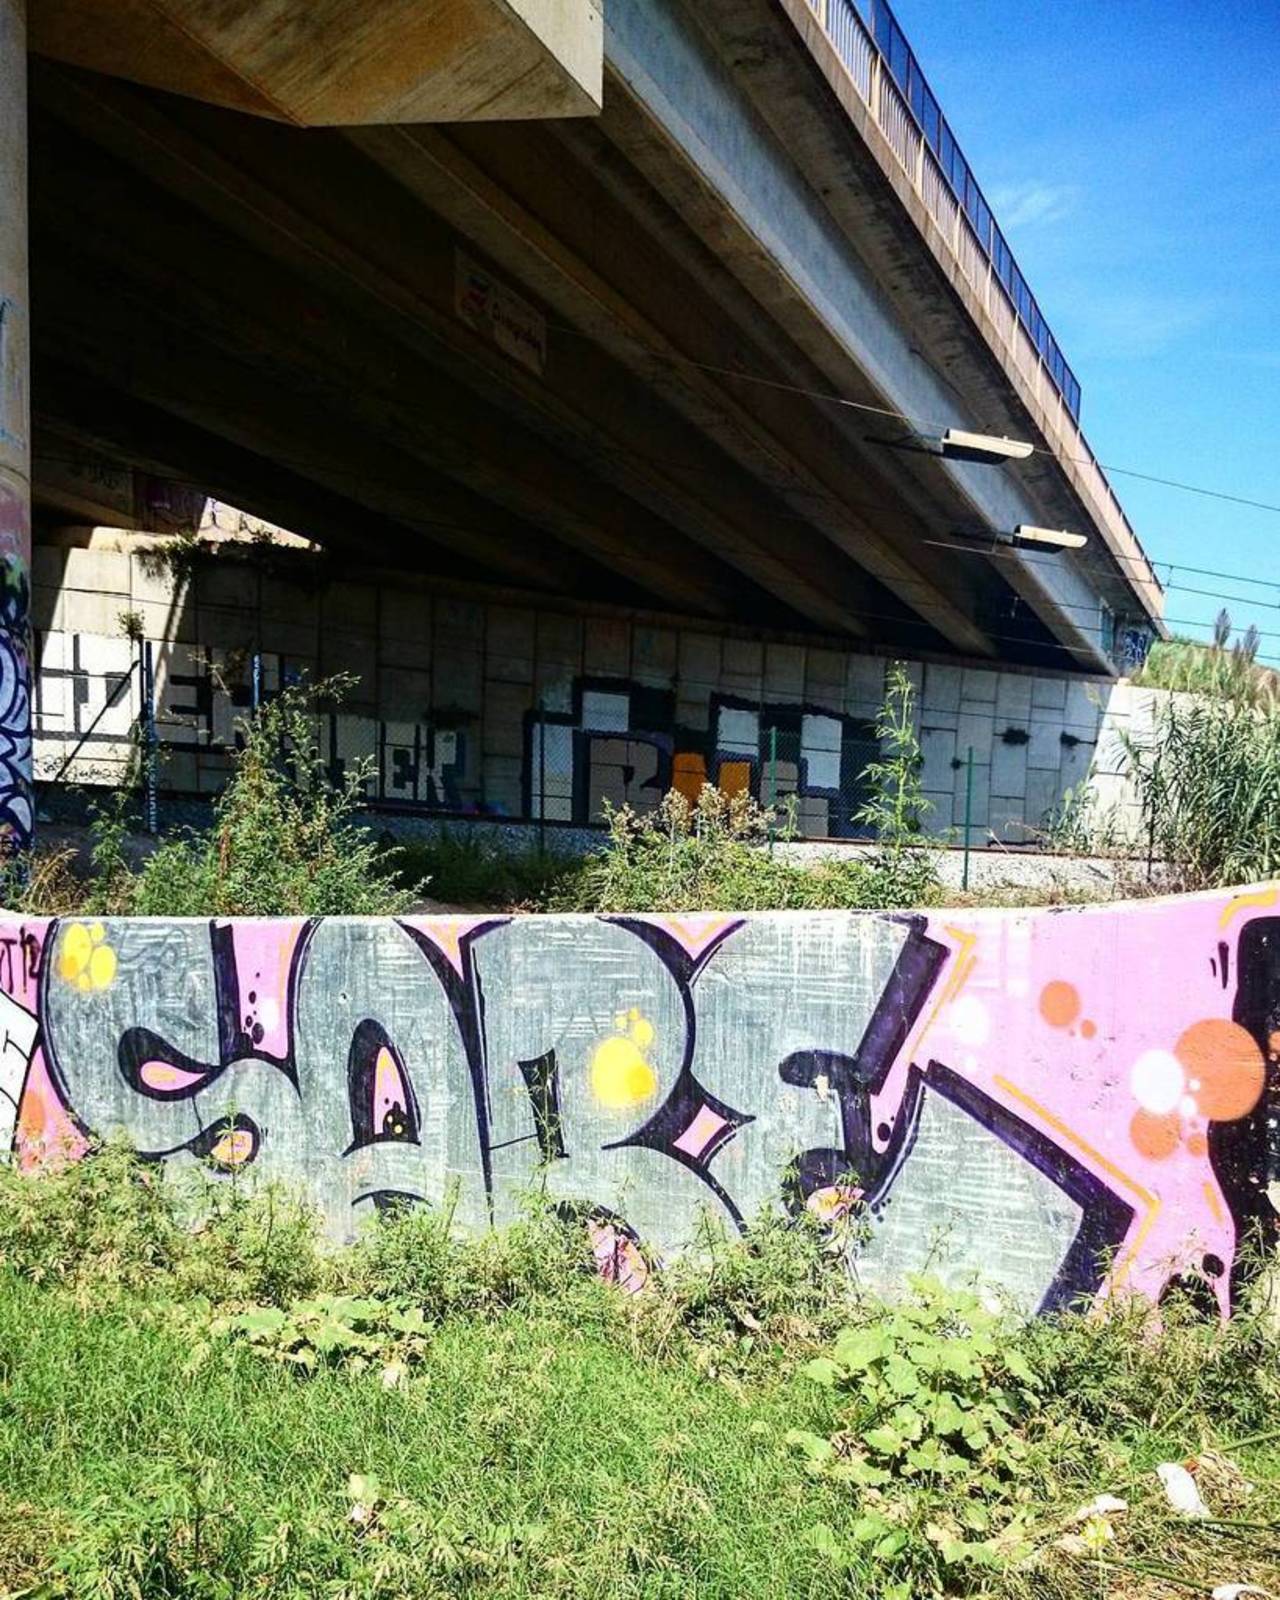 RT @artpushr: via #bcnlegends "http://bit.ly/1iYGlOp" #graffiti #streetart http://t.co/rHJAXxoBMM